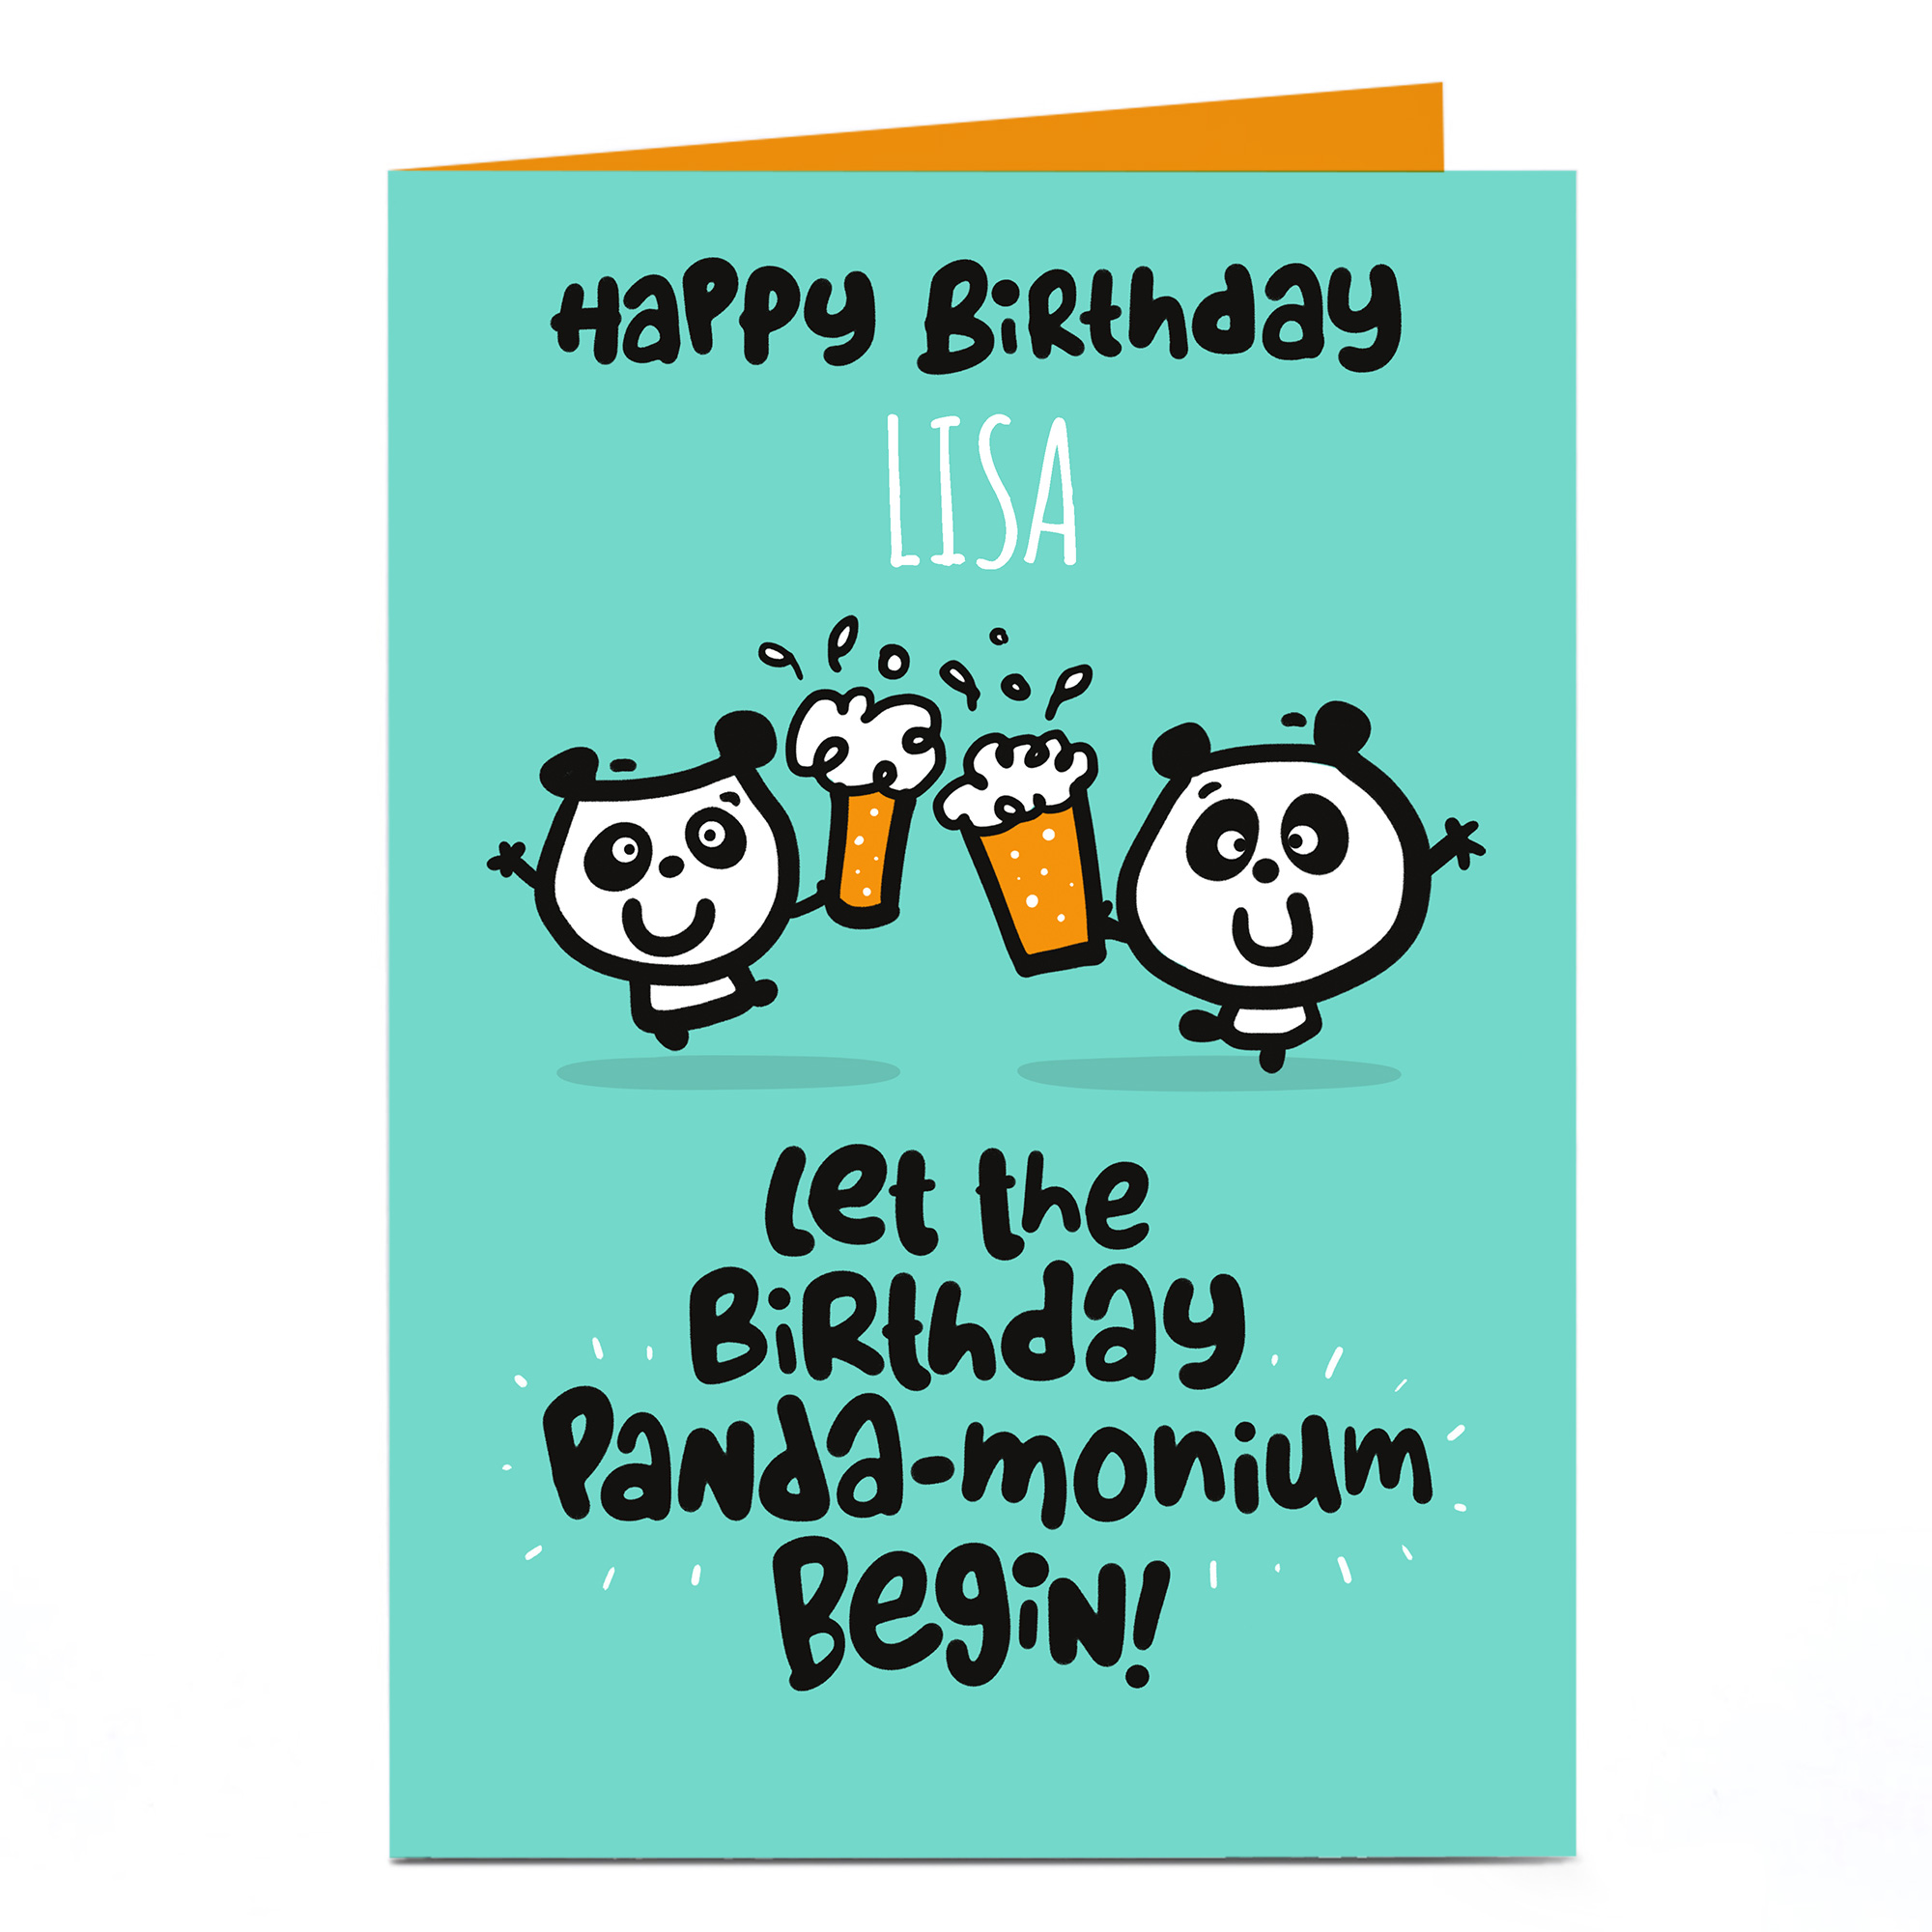 Personalised Fruitloops Birthday Card - Panda-monium